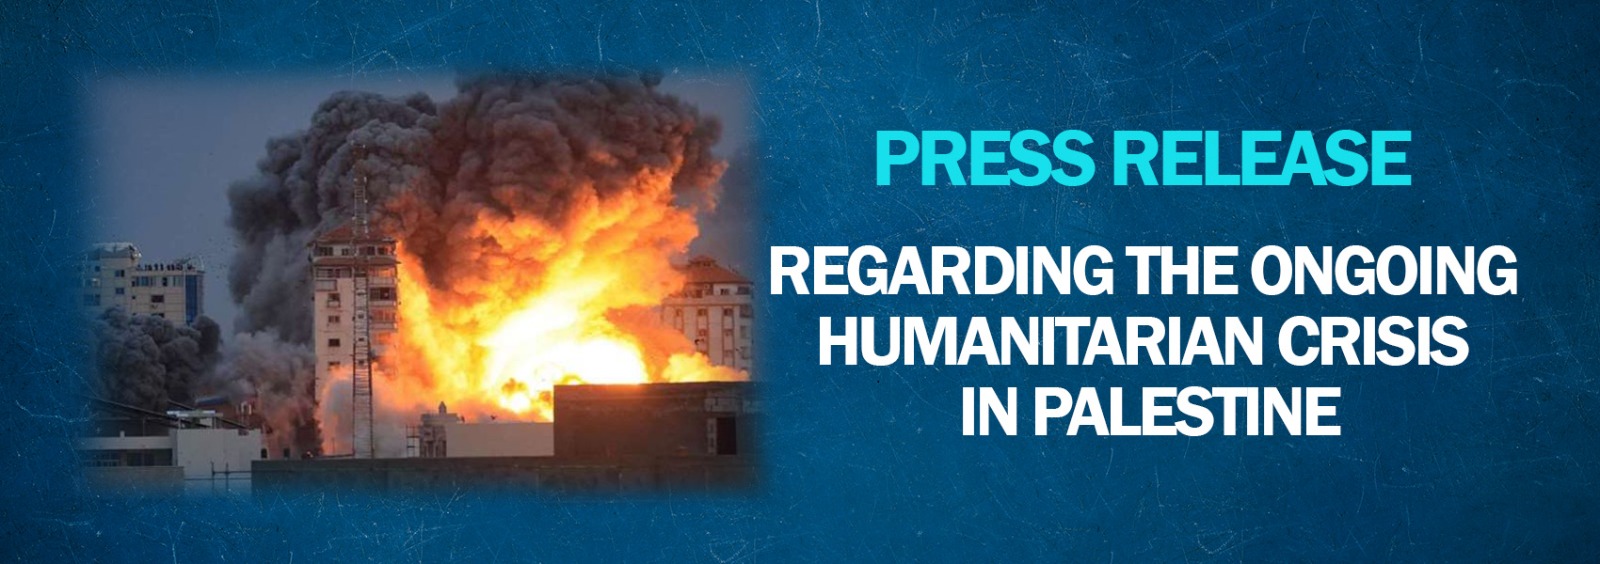 Press Release Regarding the Ongoing Humanitarian Crisis in Palestine